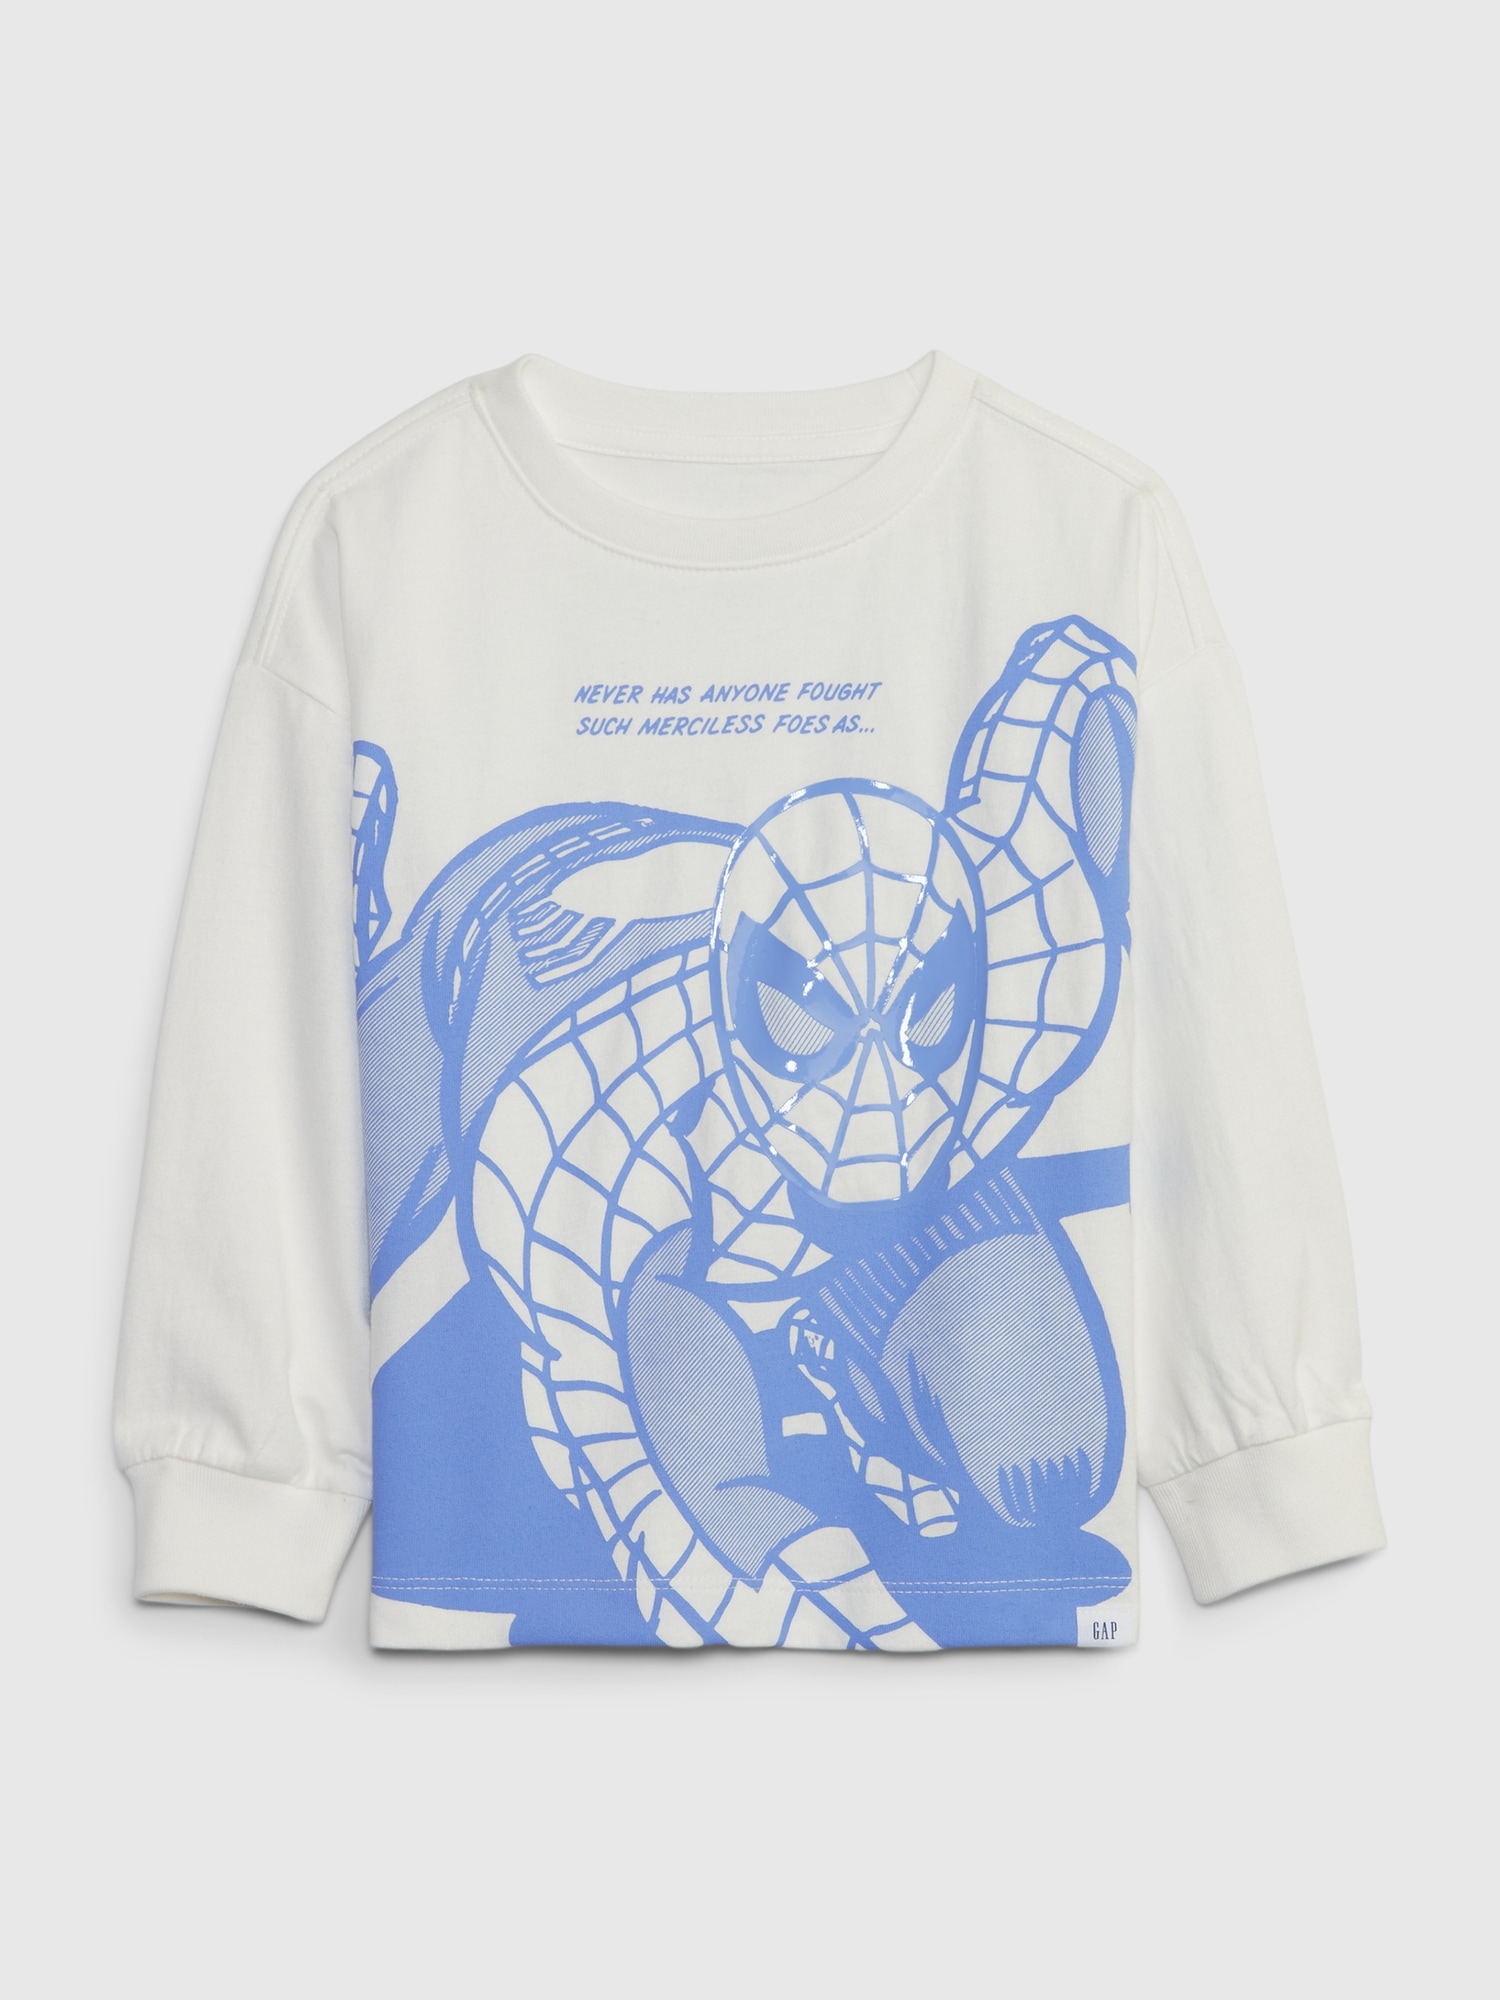 Shirts, Stitch Spiderman Mashup Tee